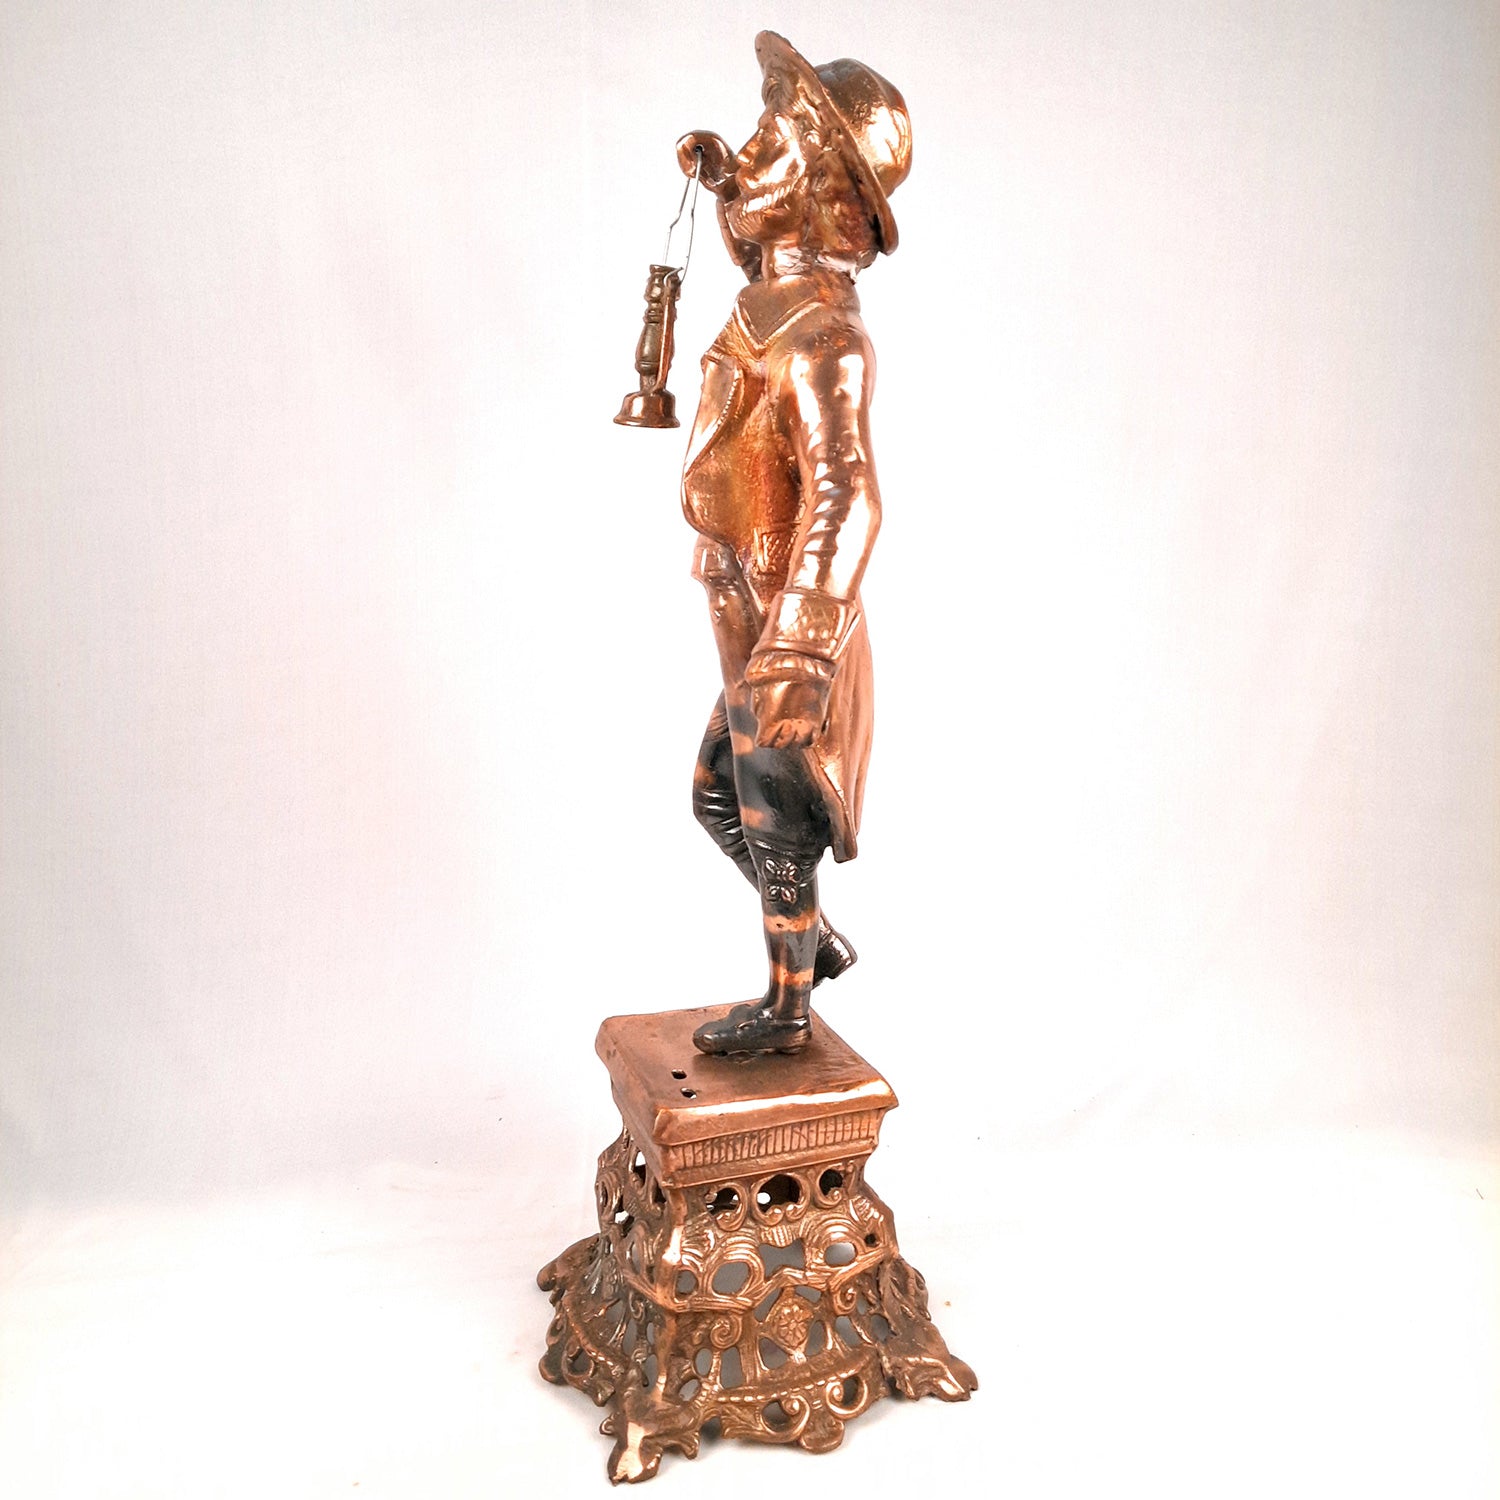 Showpiece Man Holding Lamp| Decorative Vintage Statue Big - For Home, Corners, Living Room Decor & Gifts - 26 Inch - Apkamart